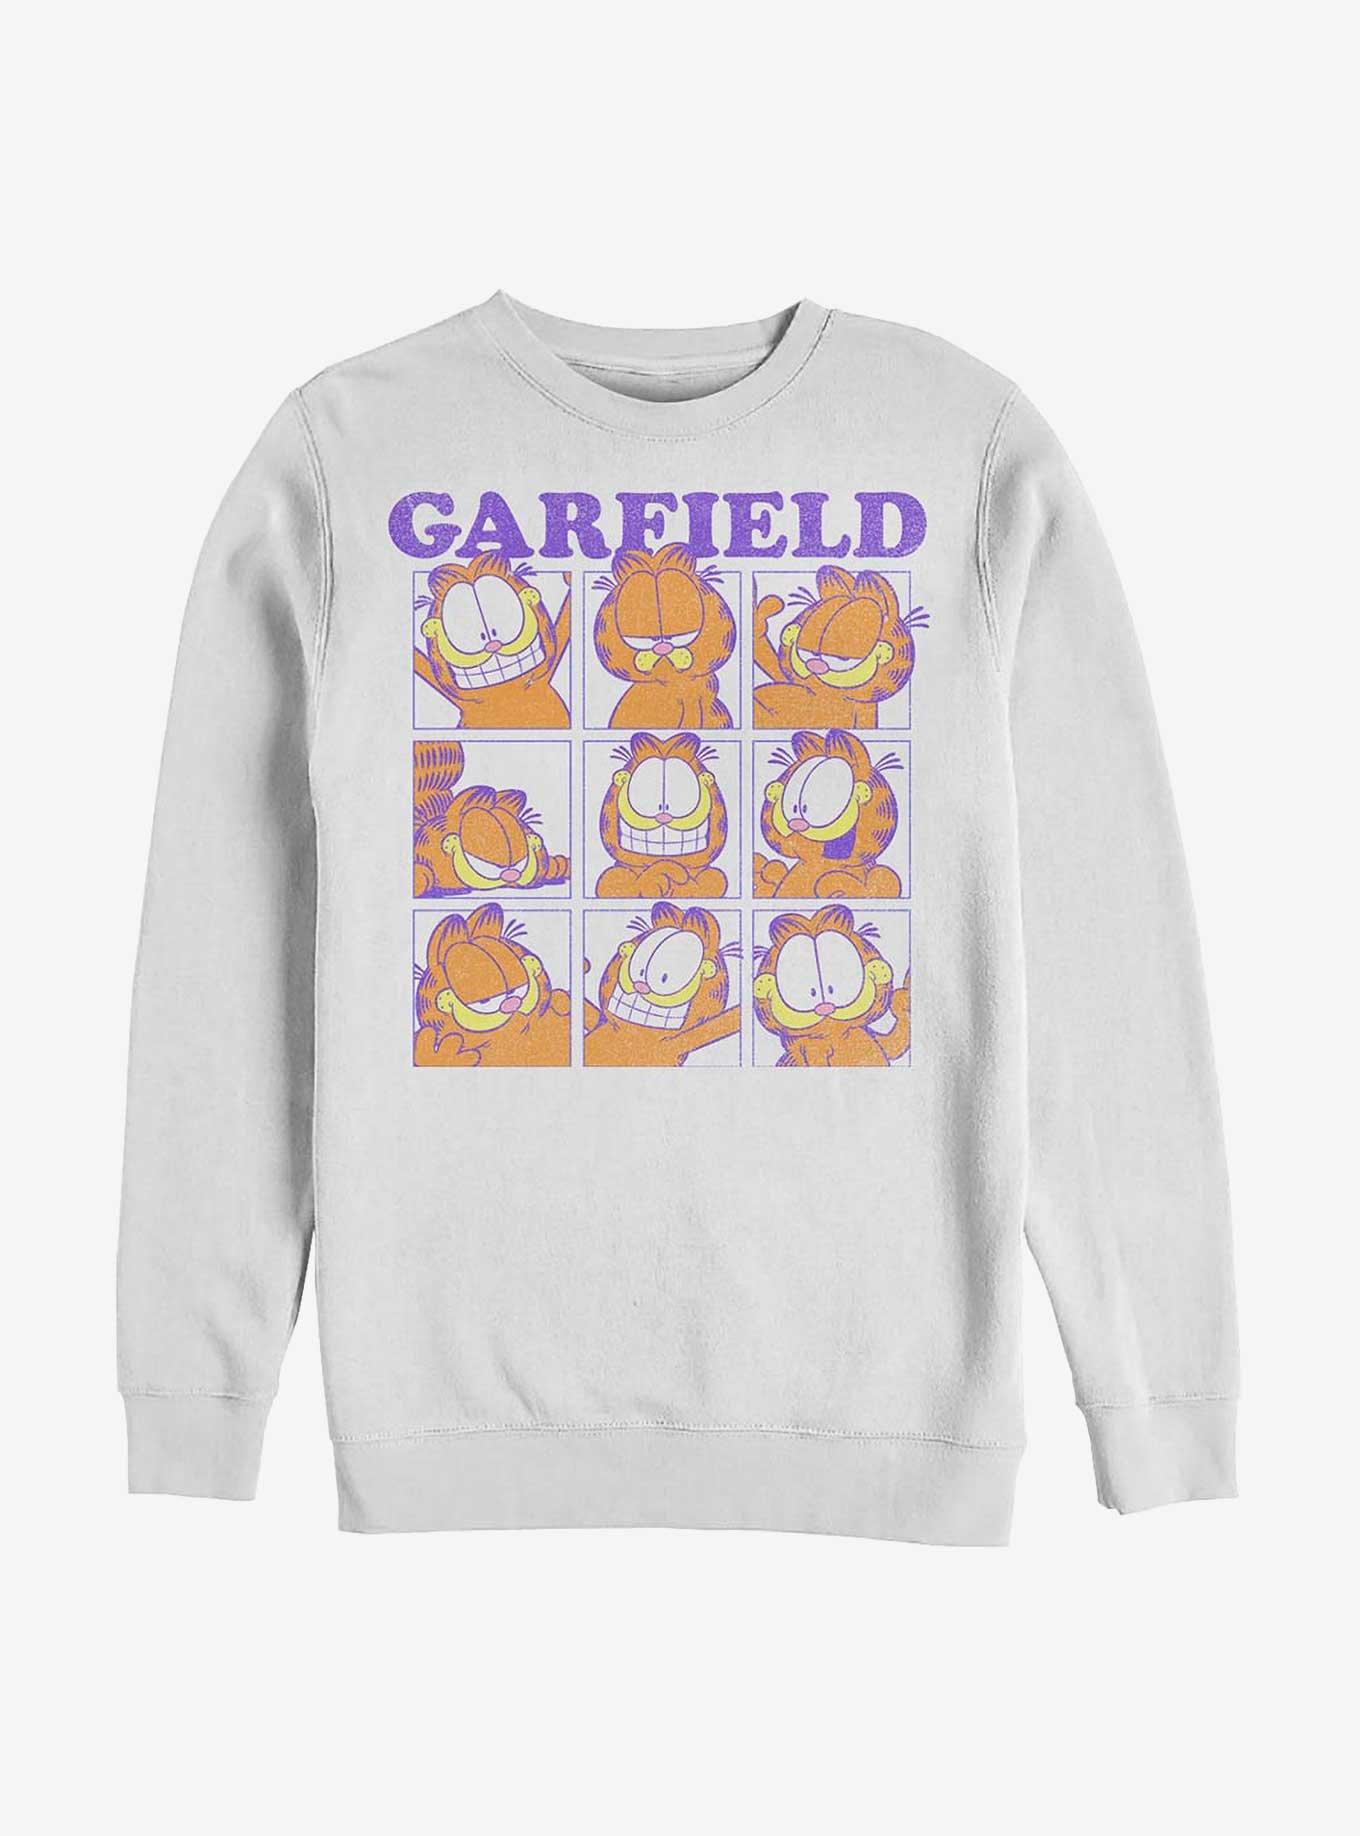 Garfield Many Faces of Garfield Sweatshirt, WHITE, hi-res